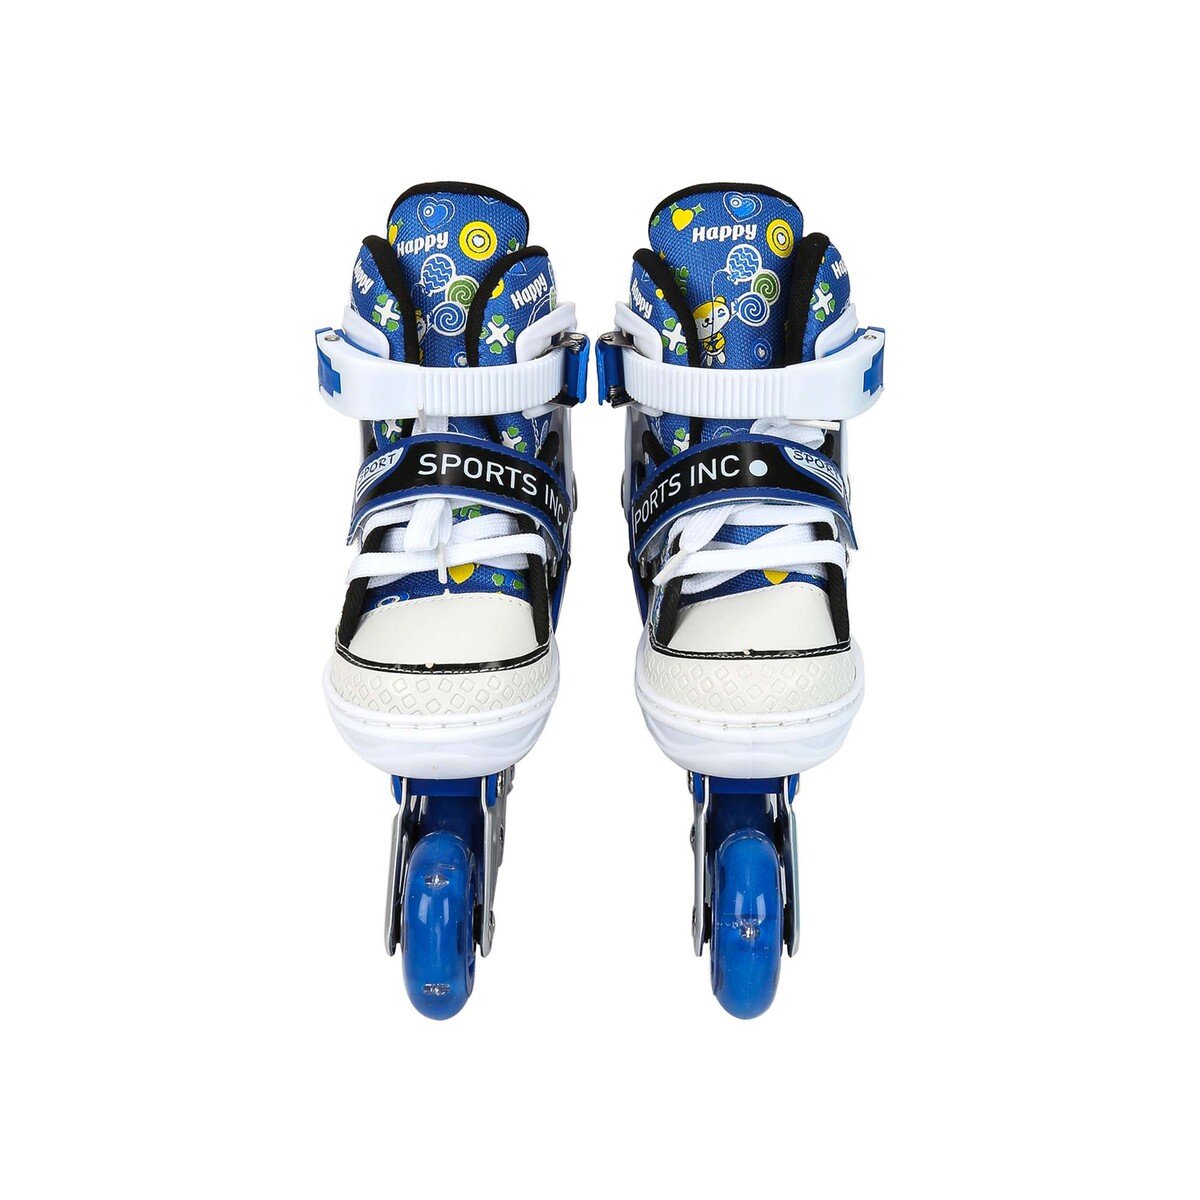 Sports Inc Inline Skate Shoe, 129B, Assorted Colors, Medium, Size 34-38